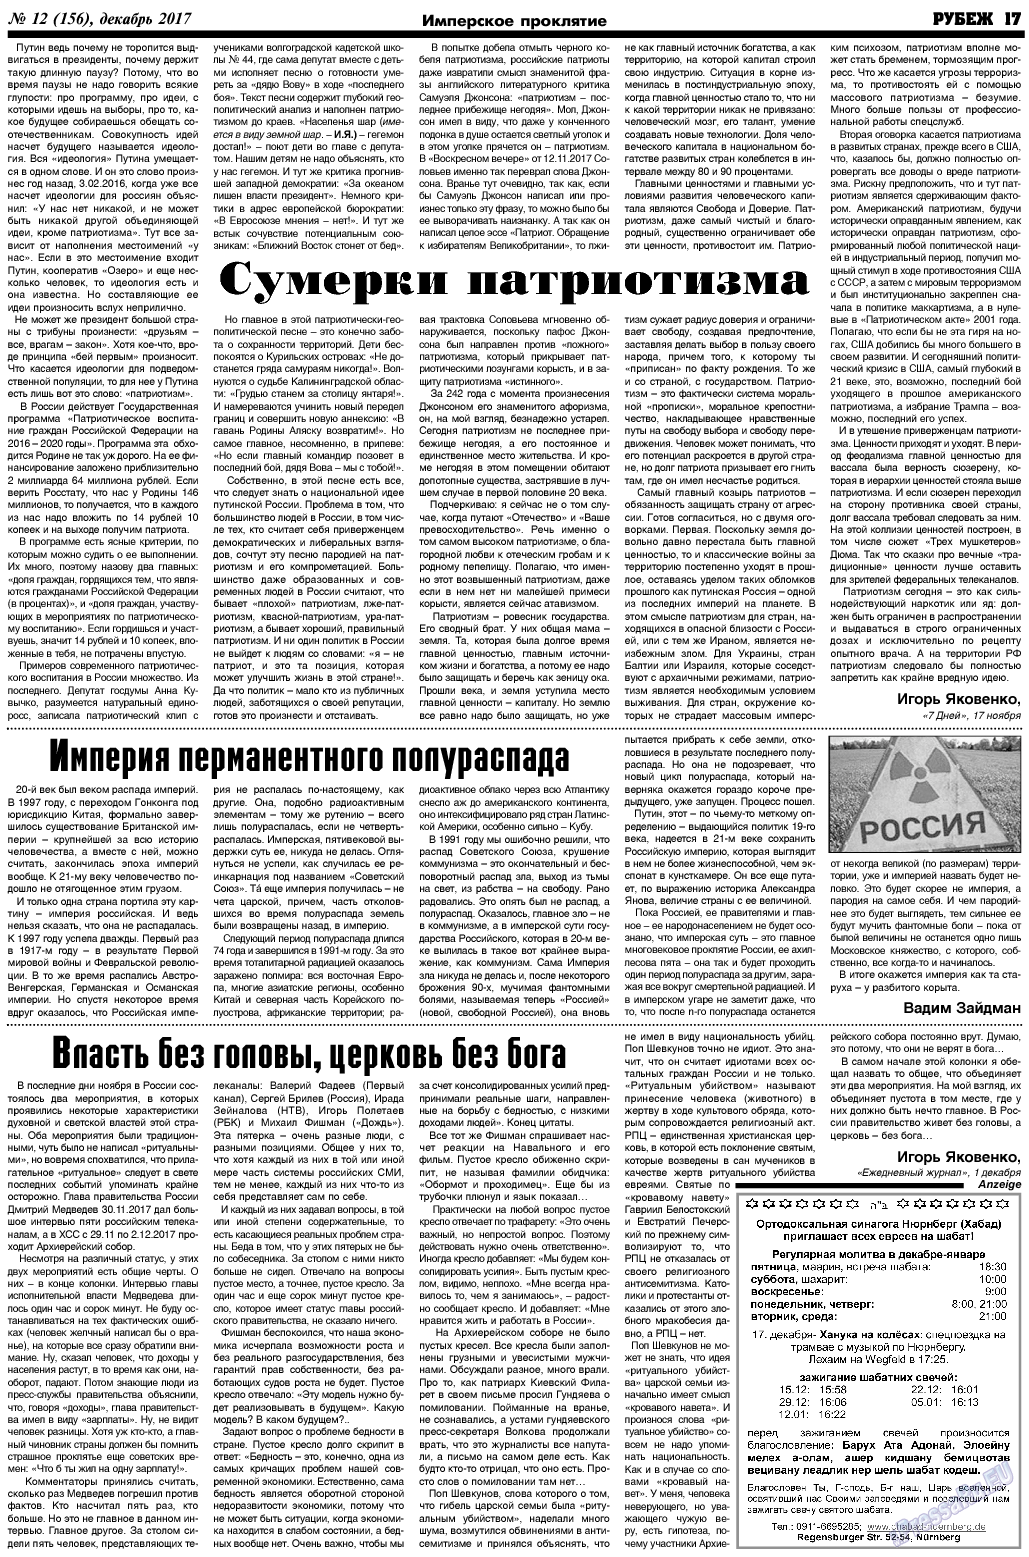 Рубеж, газета. 2017 №12 стр.17